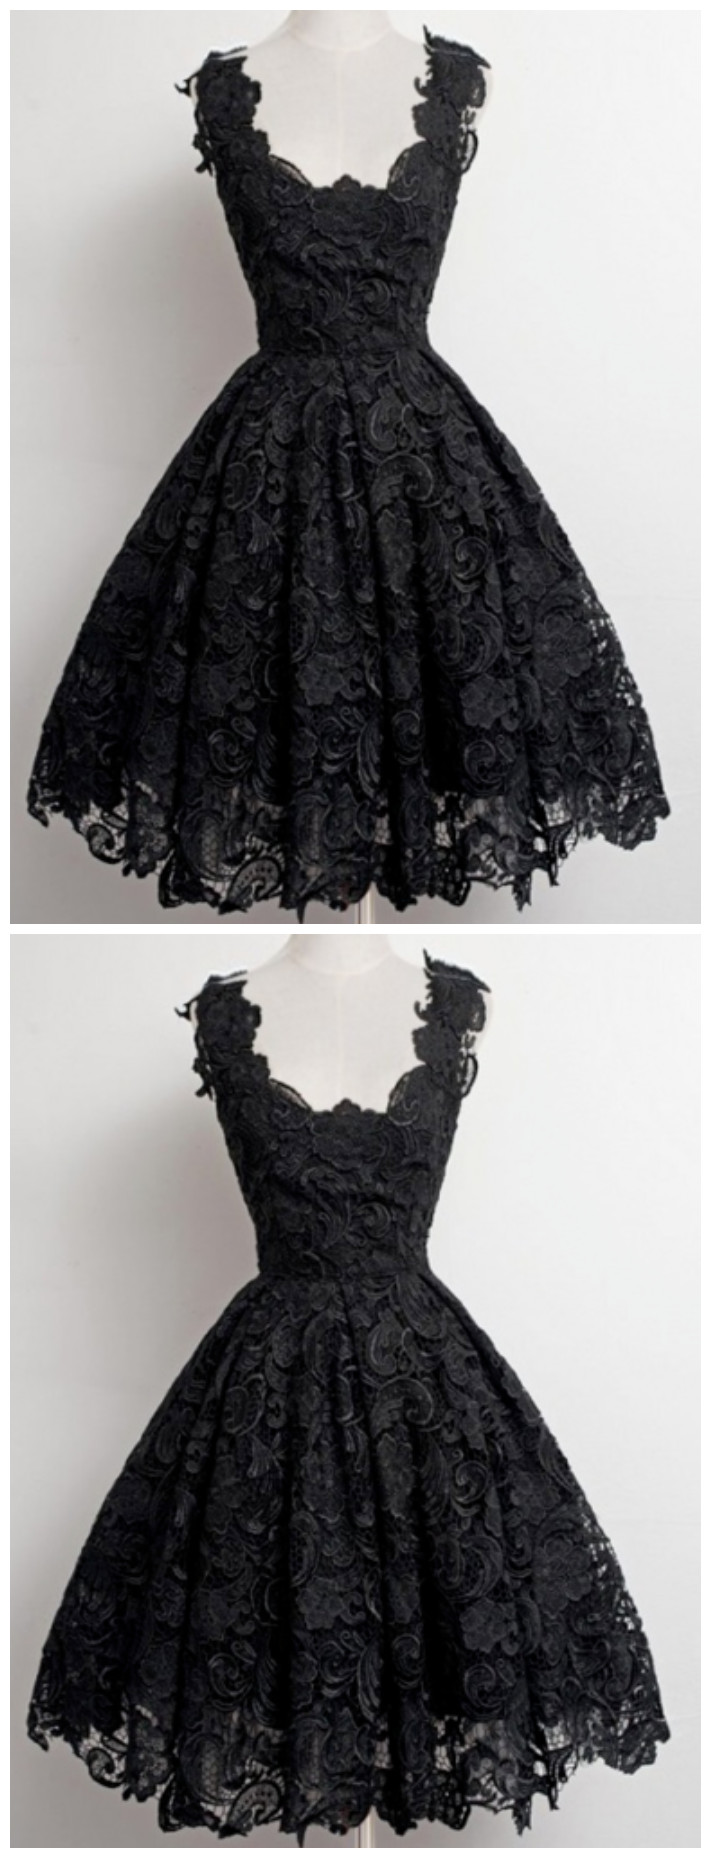 Sassy Wedding Vintage A-line Knee-length Black Lace Prom Homecoming Dress